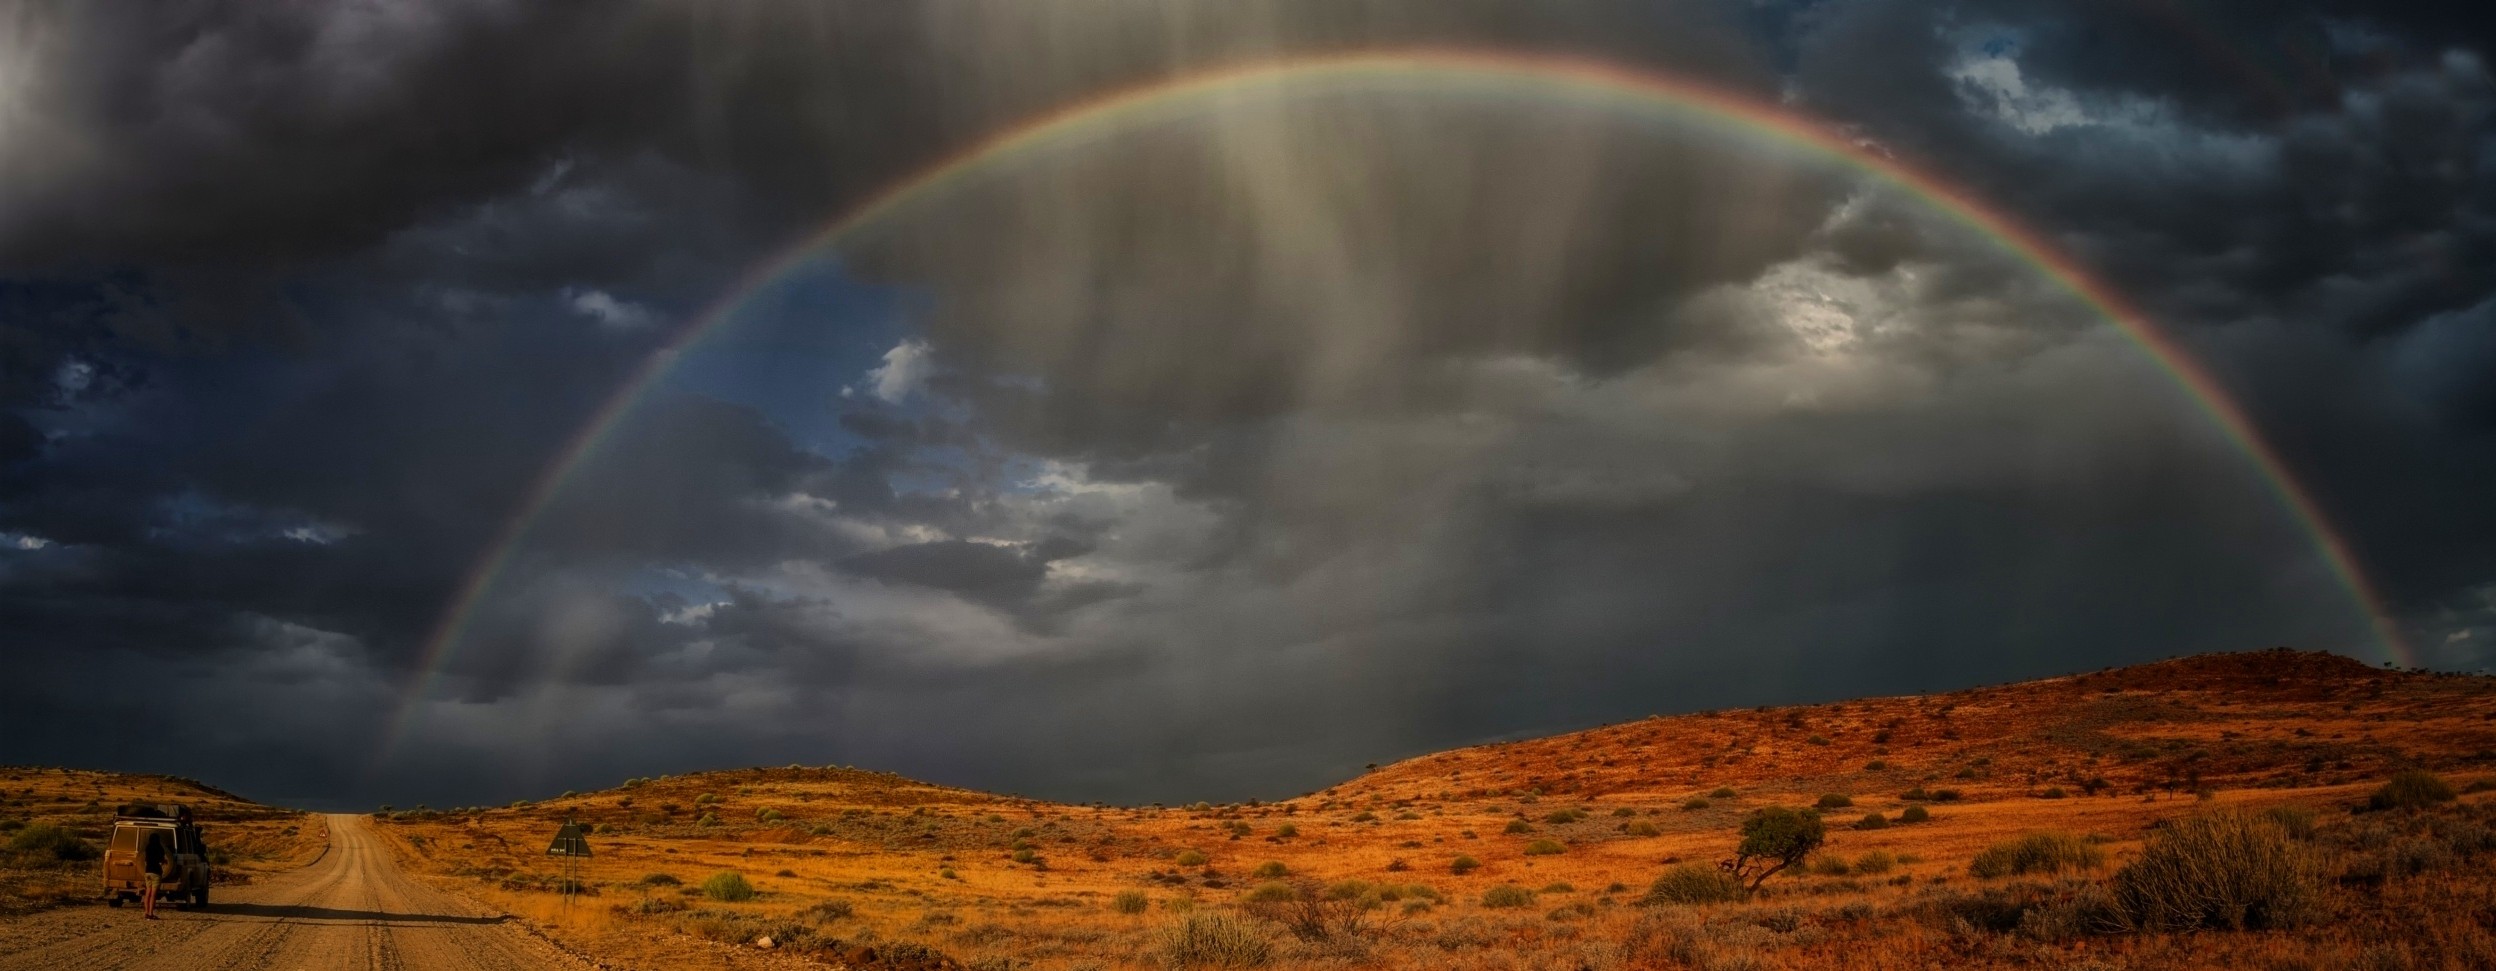 Landscape Nature Africa Namibia Rainbows Steppe Dirt Road Clouds Rain 4x4 Shrubs 2496x971